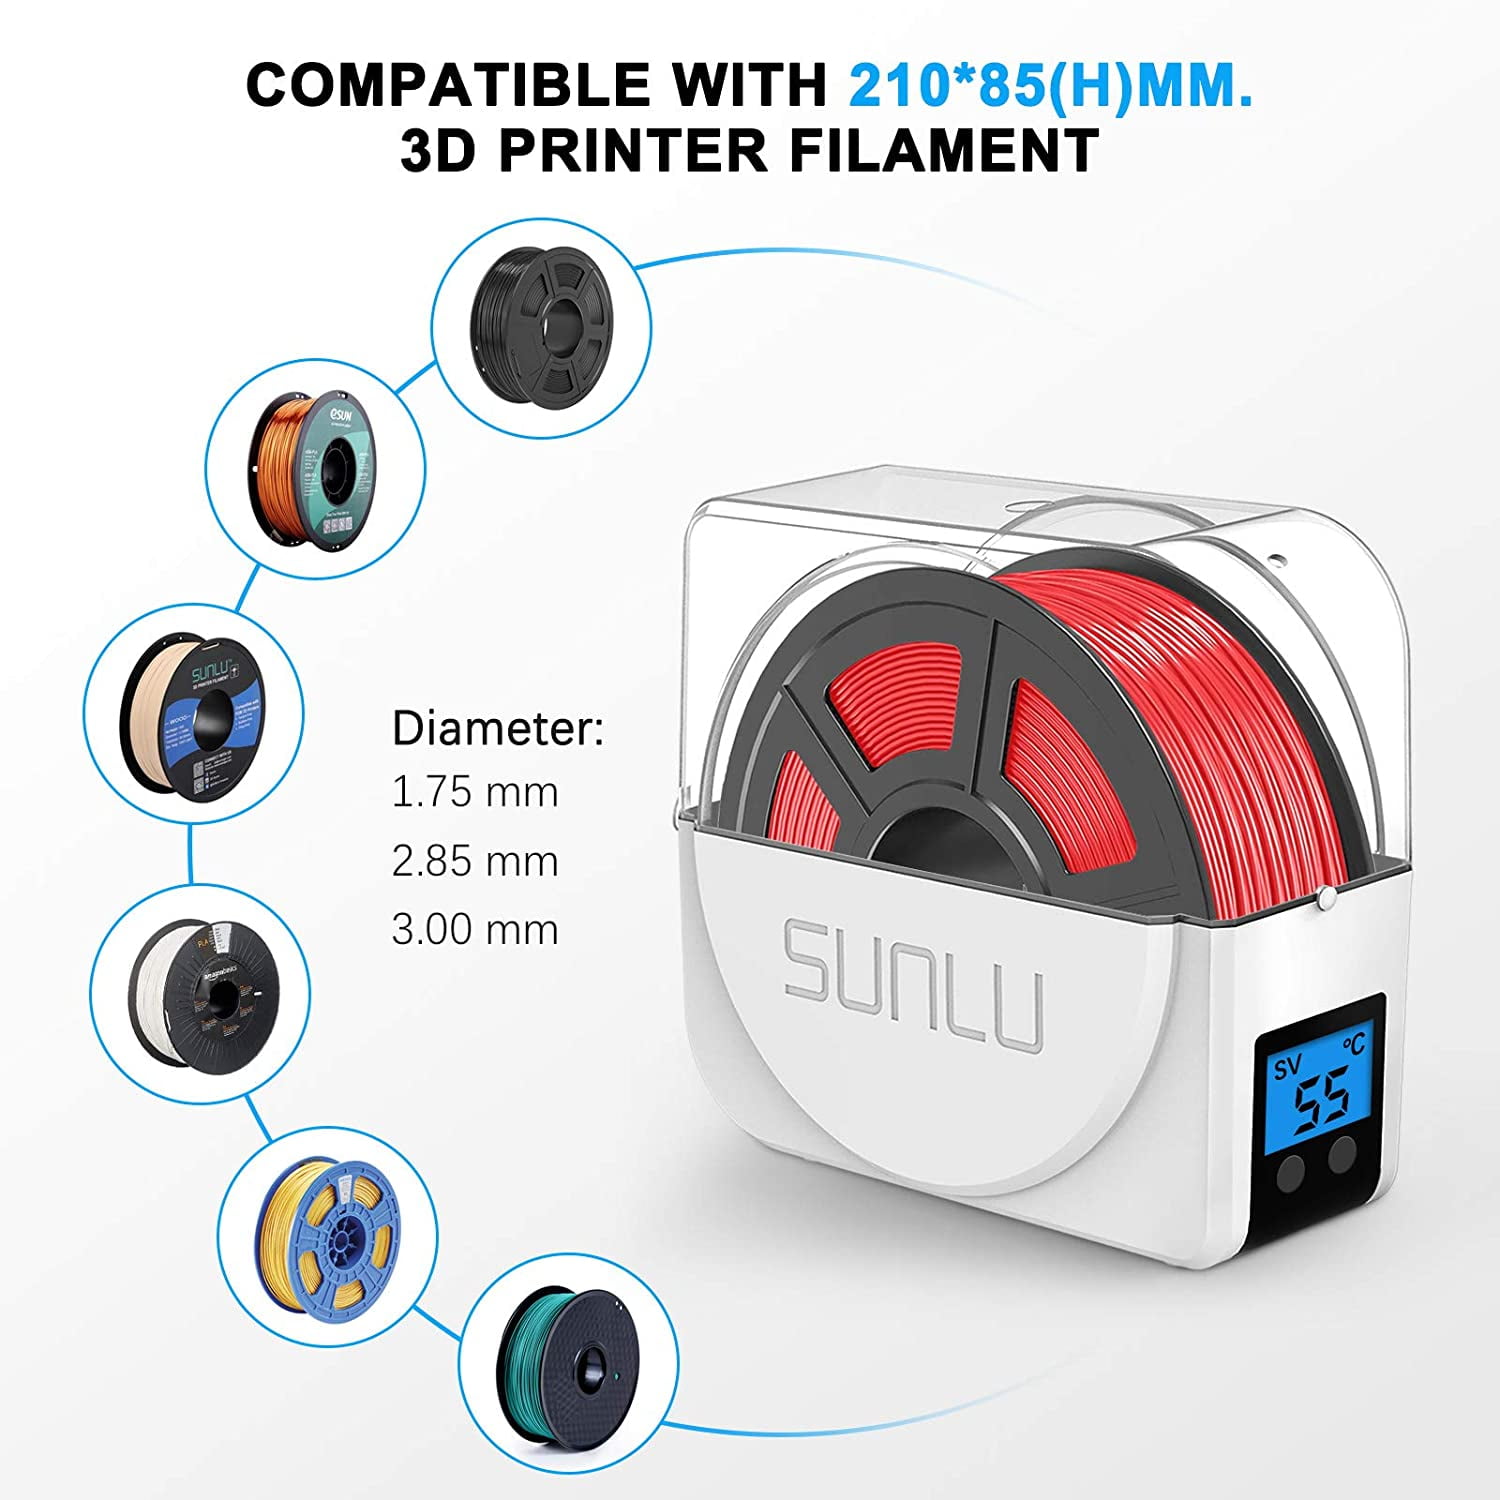 SUNLU Filament Dryer Dox Upgrade S2 Keeping Filament Dry Holder S2  FilaDryer 360° Surround Heating